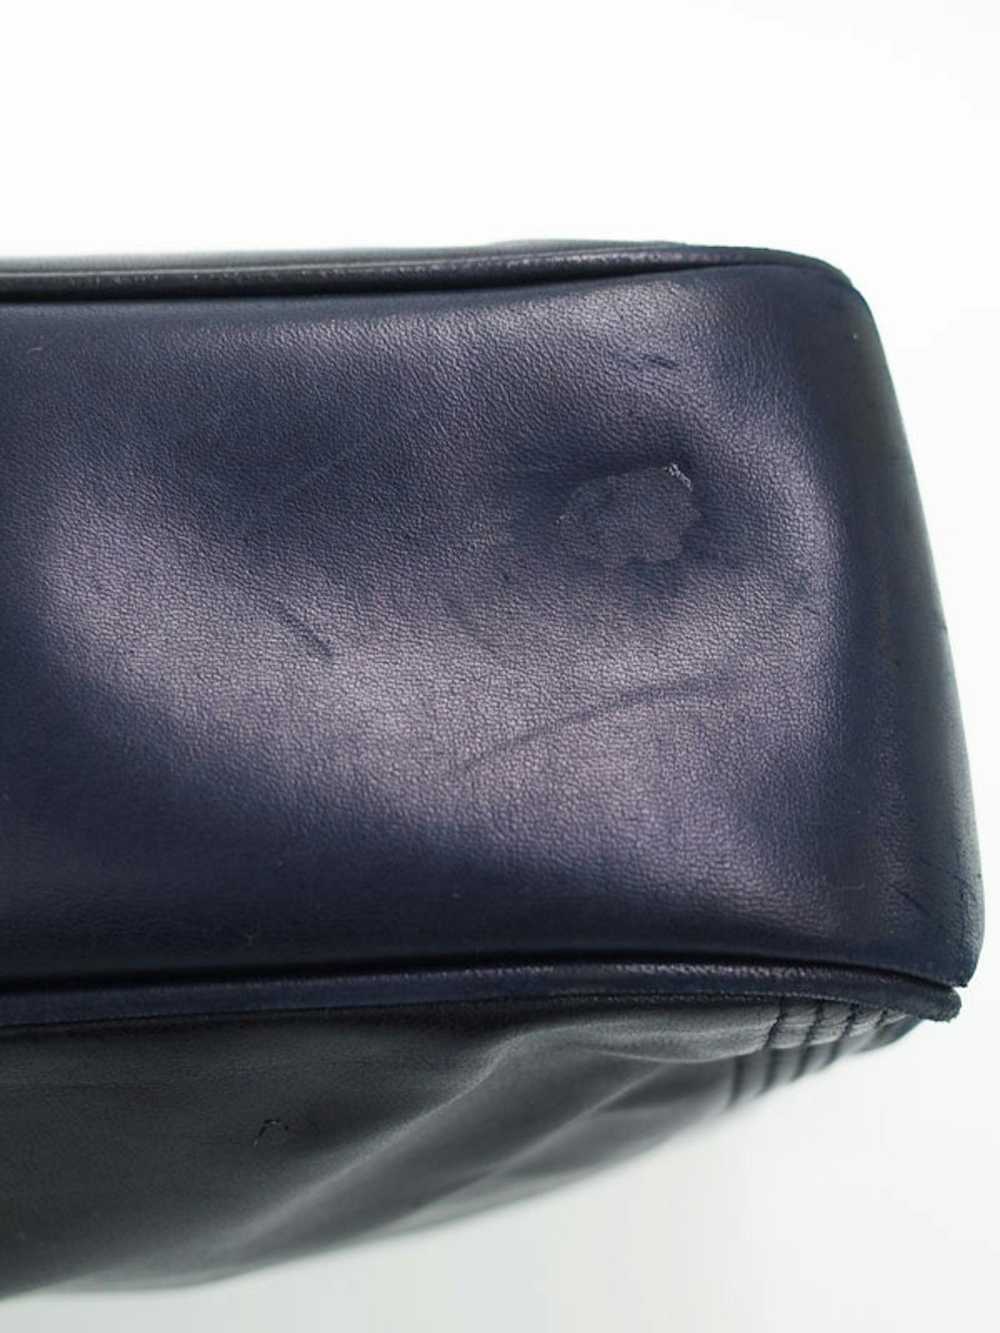 Chanel Chanel Coco Mark Shoulder Bag Black x Navy - image 8